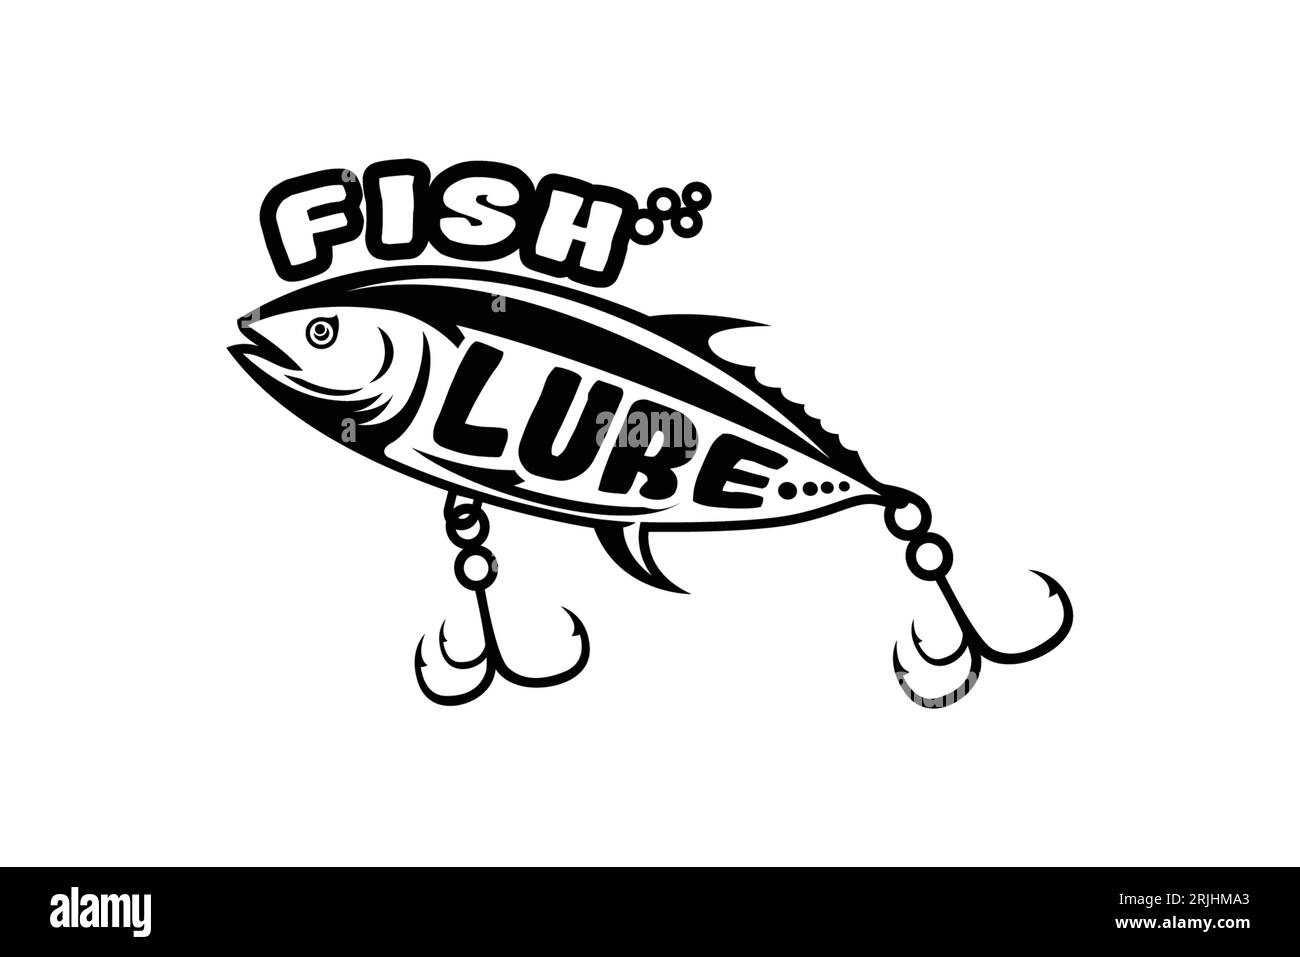 https://c8.alamy.com/comp/2RJHMA3/bait-lure-fish-hook-fishing-angler-logo-design-inspiration-2RJHMA3.jpg